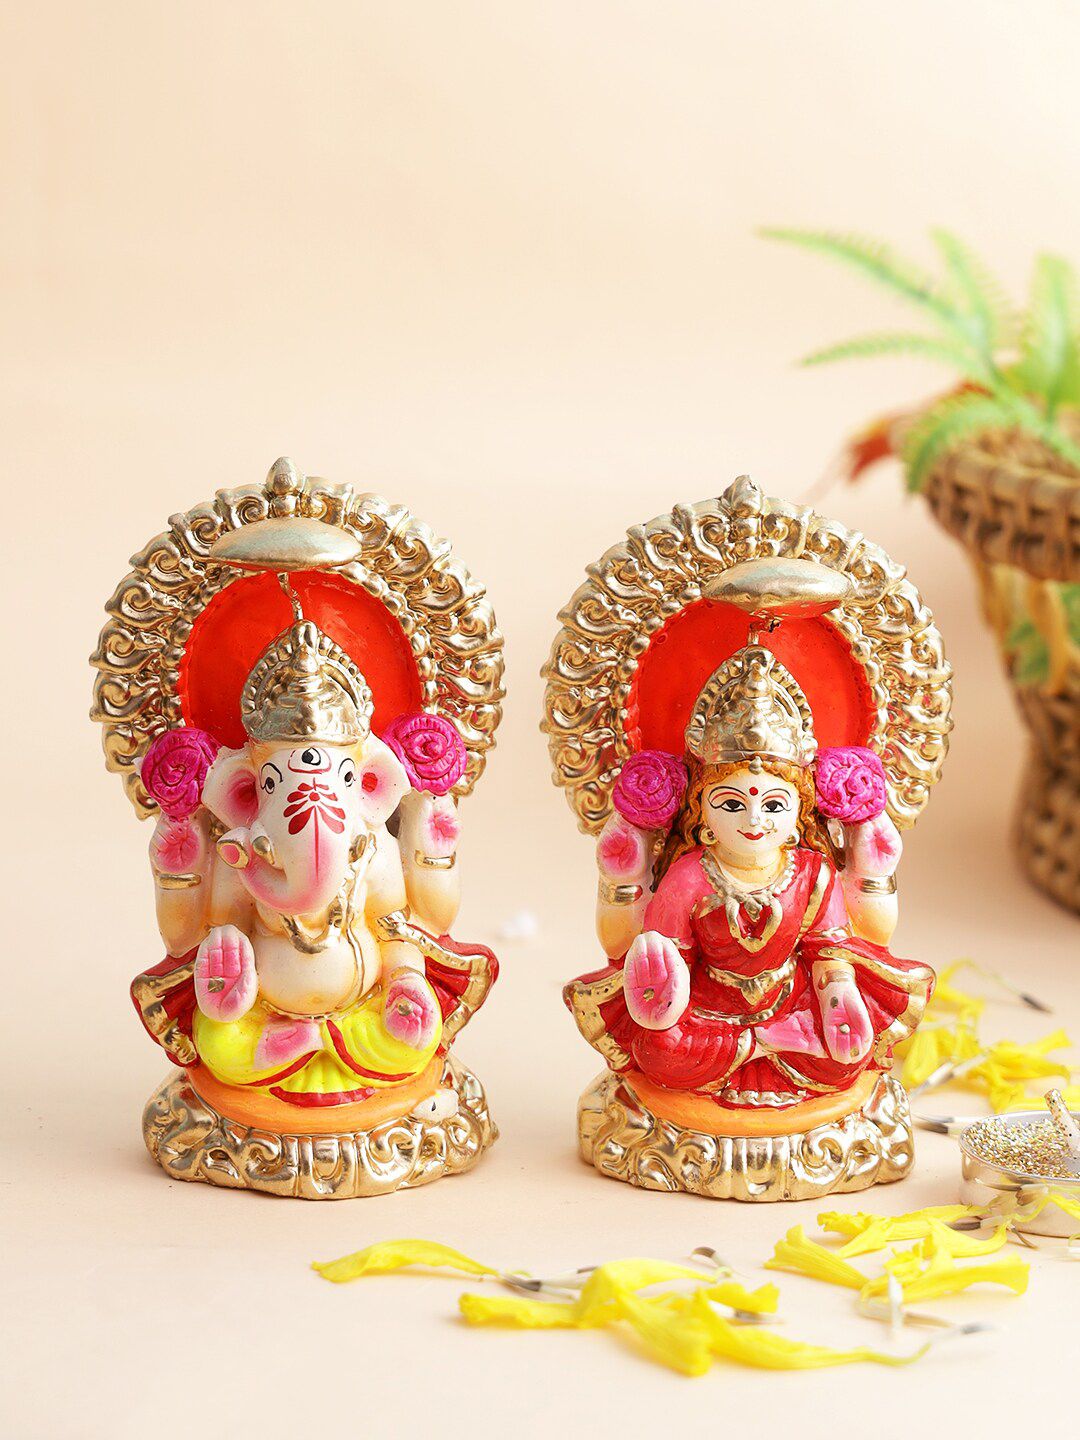 Aapno Rajasthan Golden Throne Handcrafted Laxmi Ganesh Idol Set Price in India